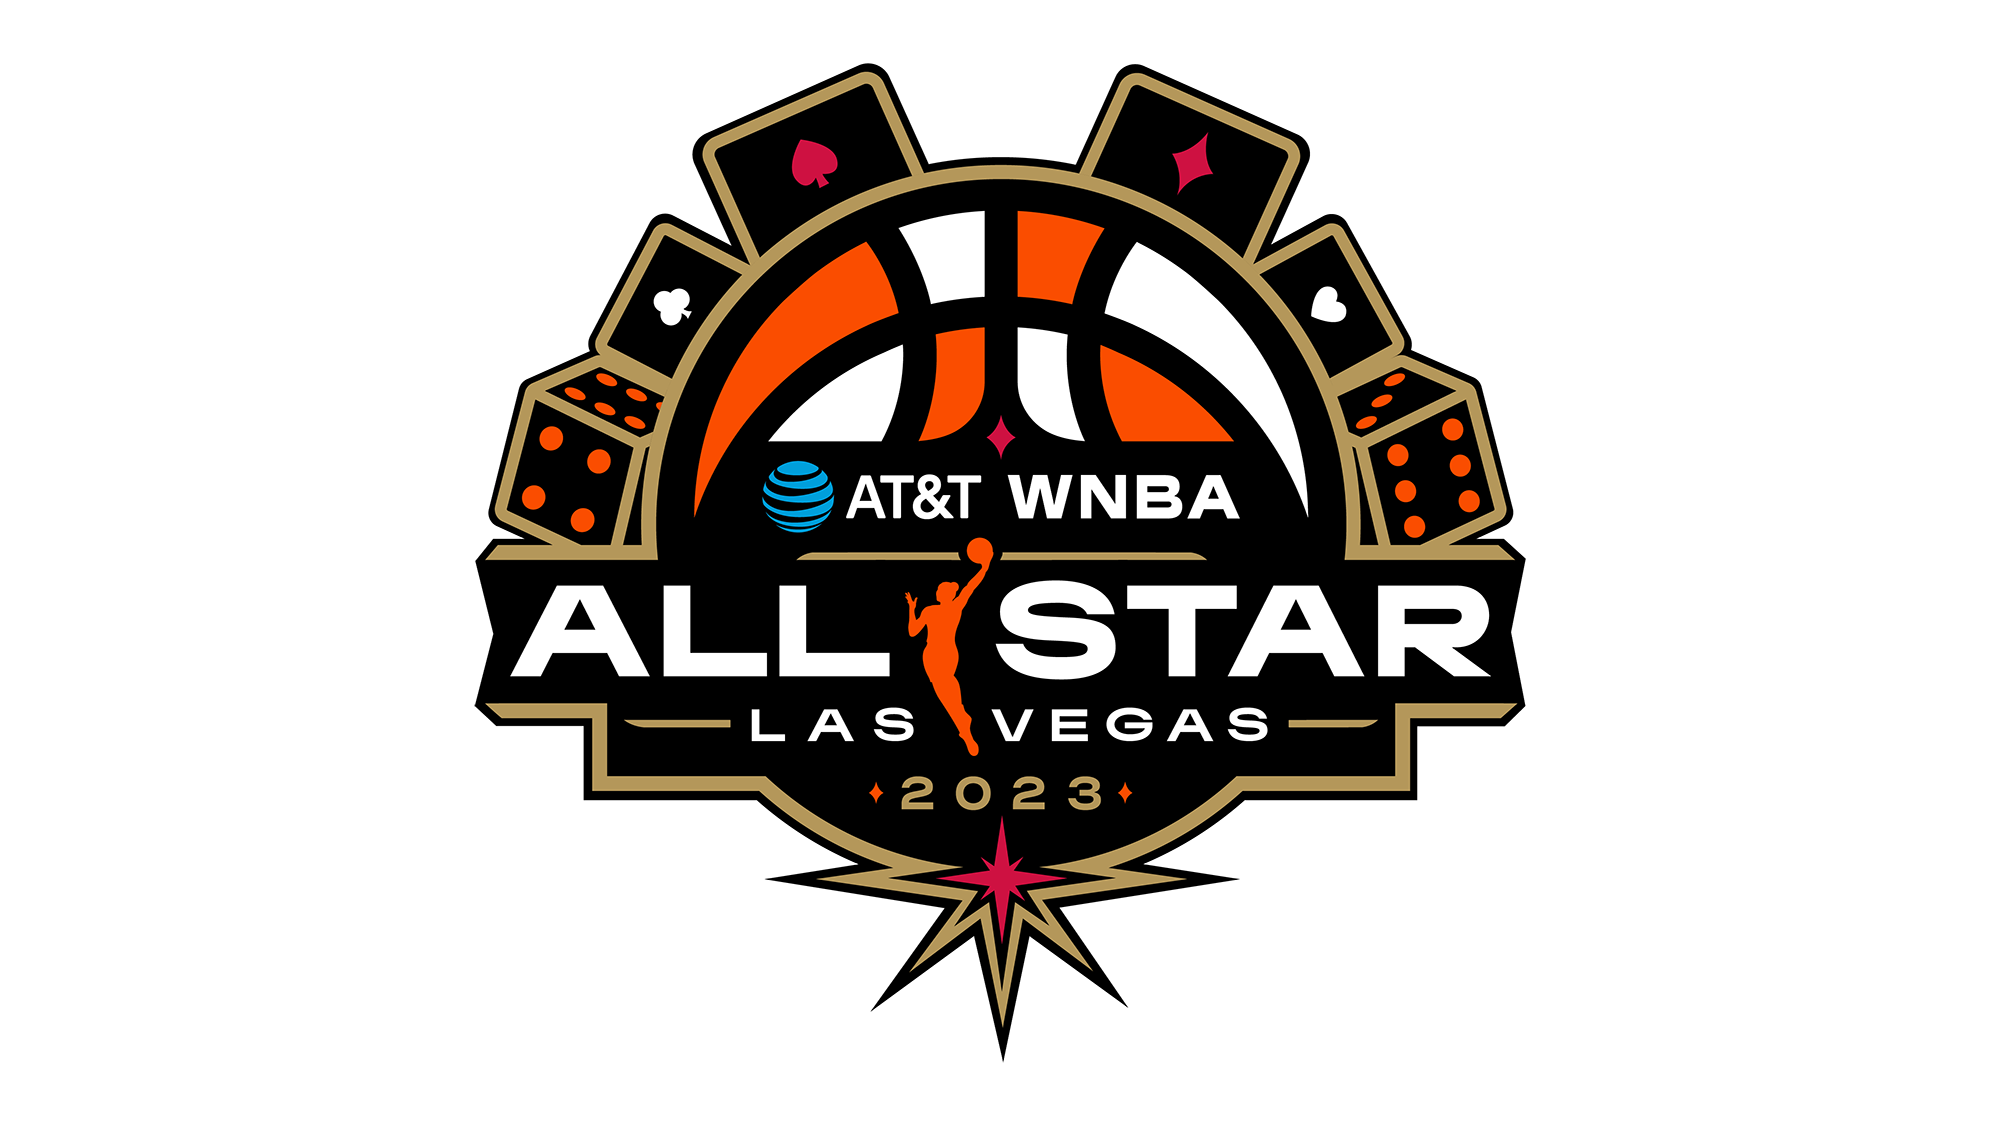 Las Vegas to host the 2023 WNBA AllStar Game